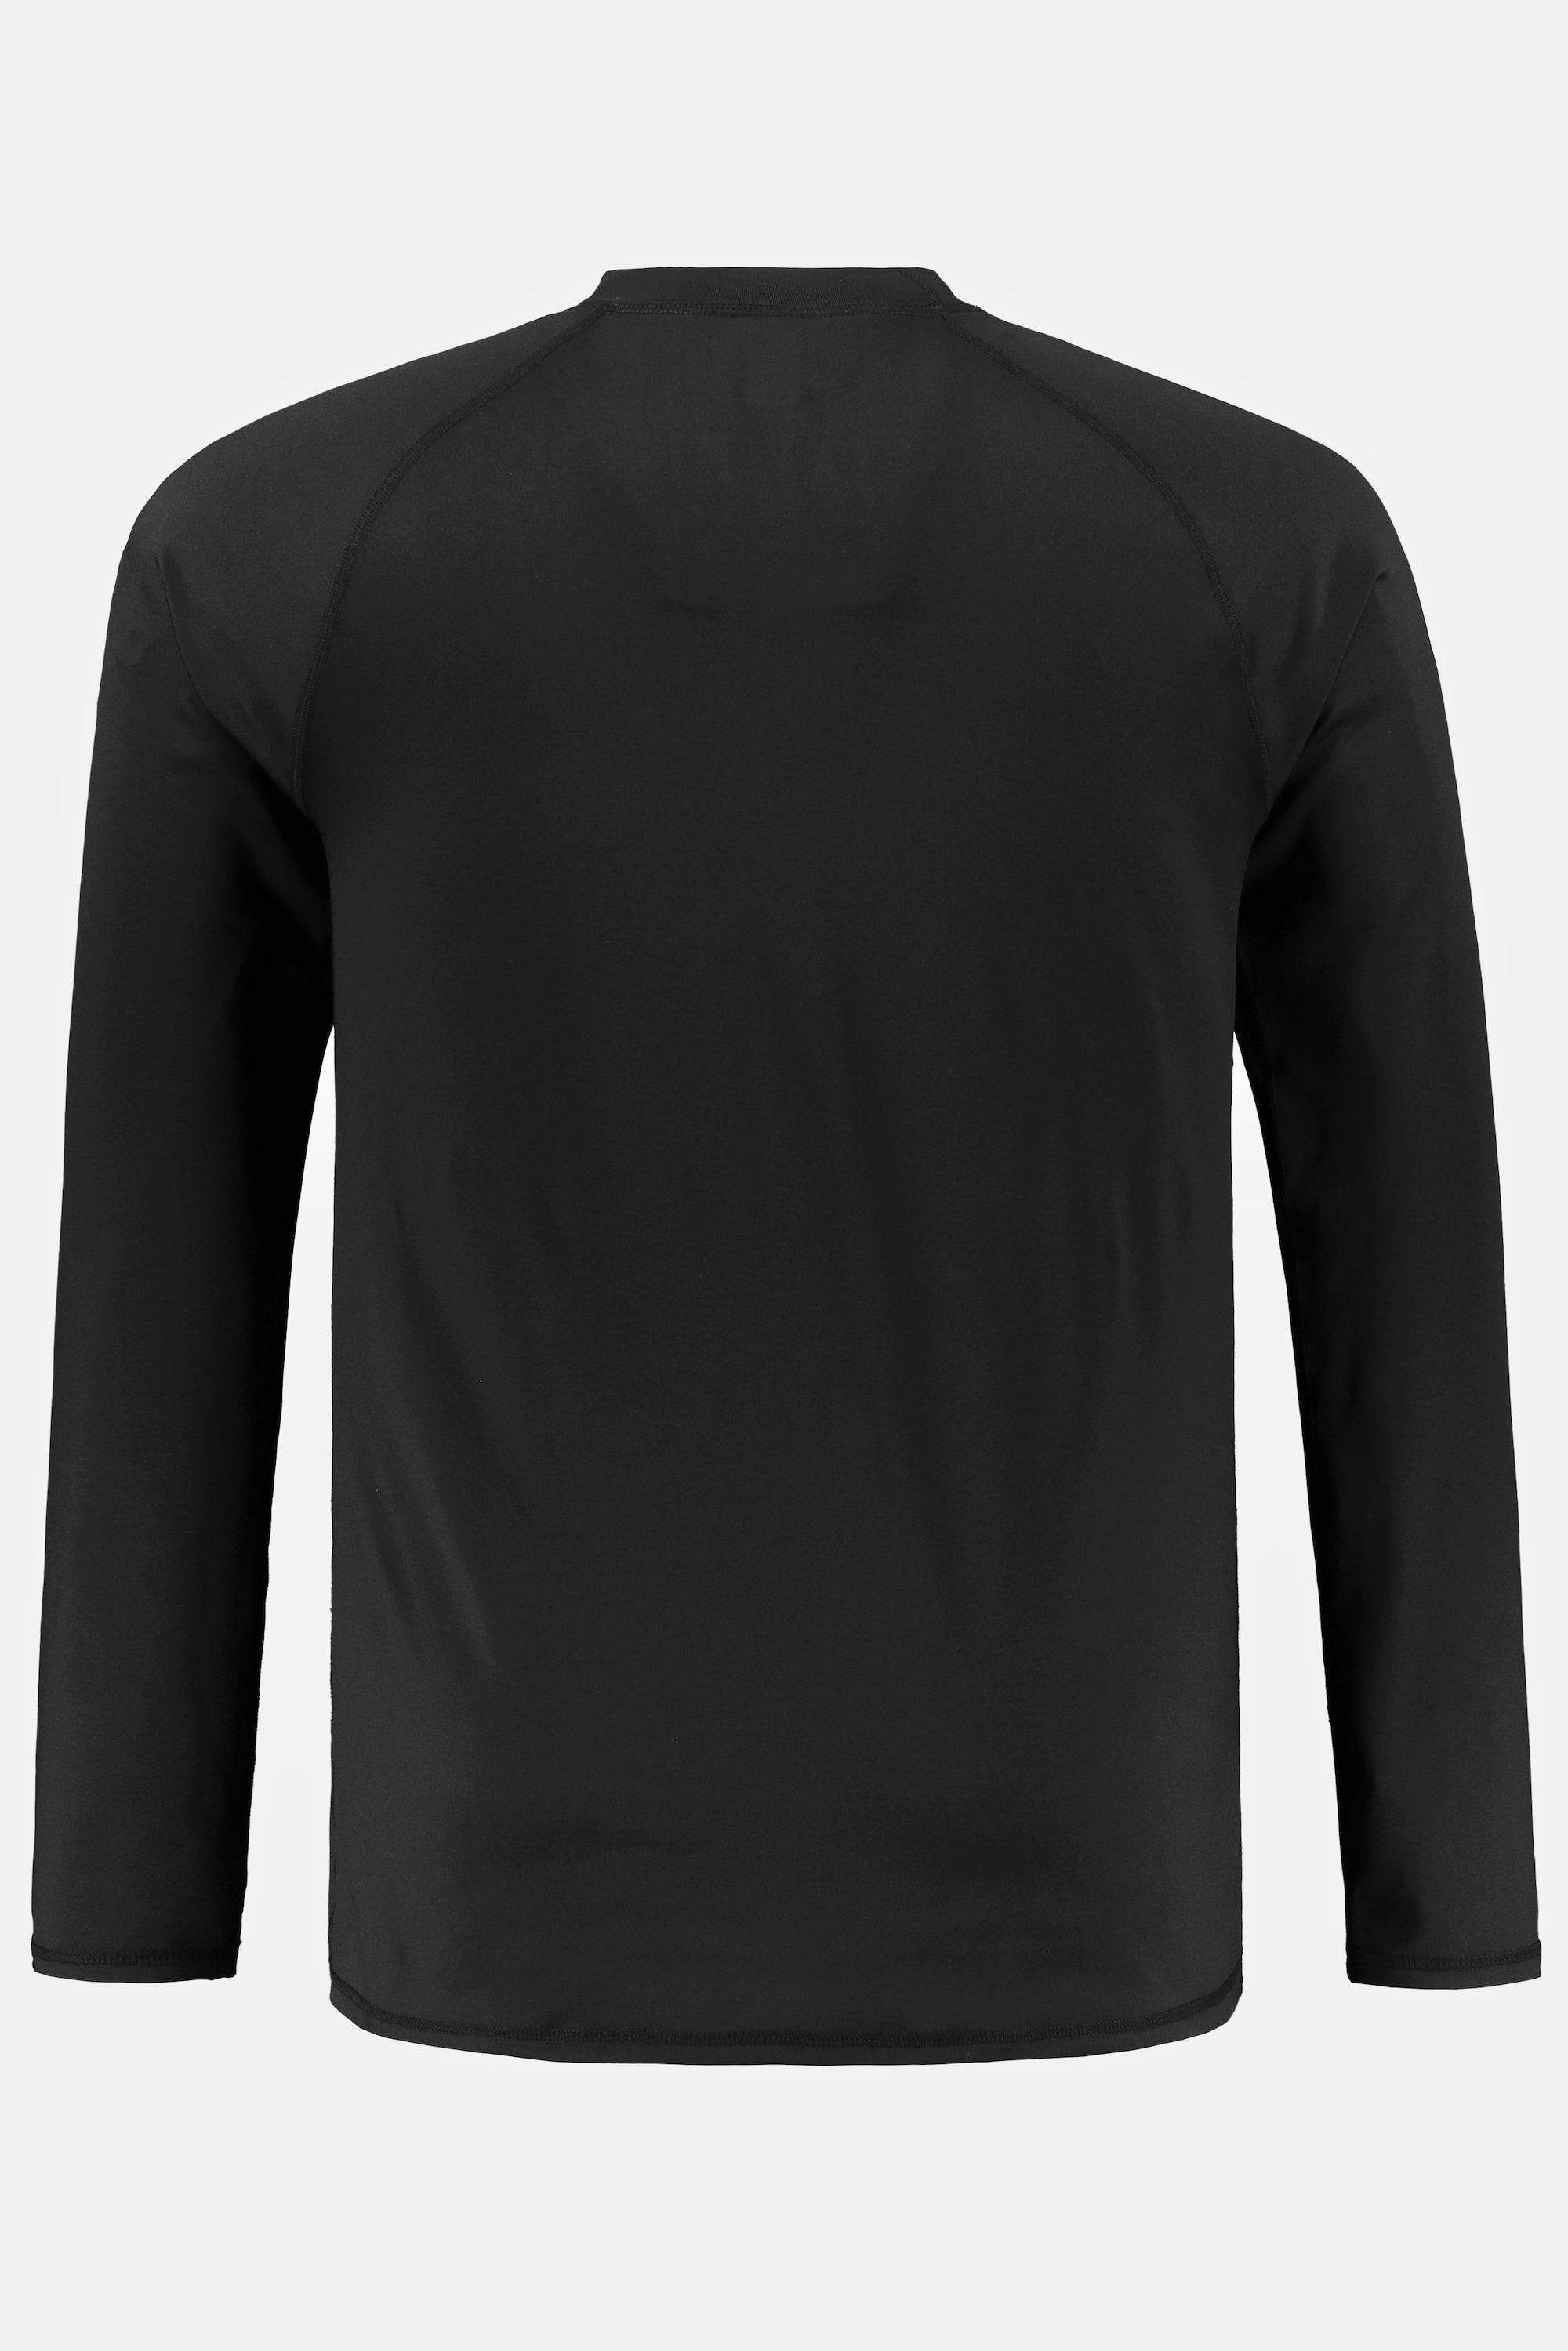 JP1880 UV-Schutz Langarm Schwimm-Shirt T-Shirt Stehkragen